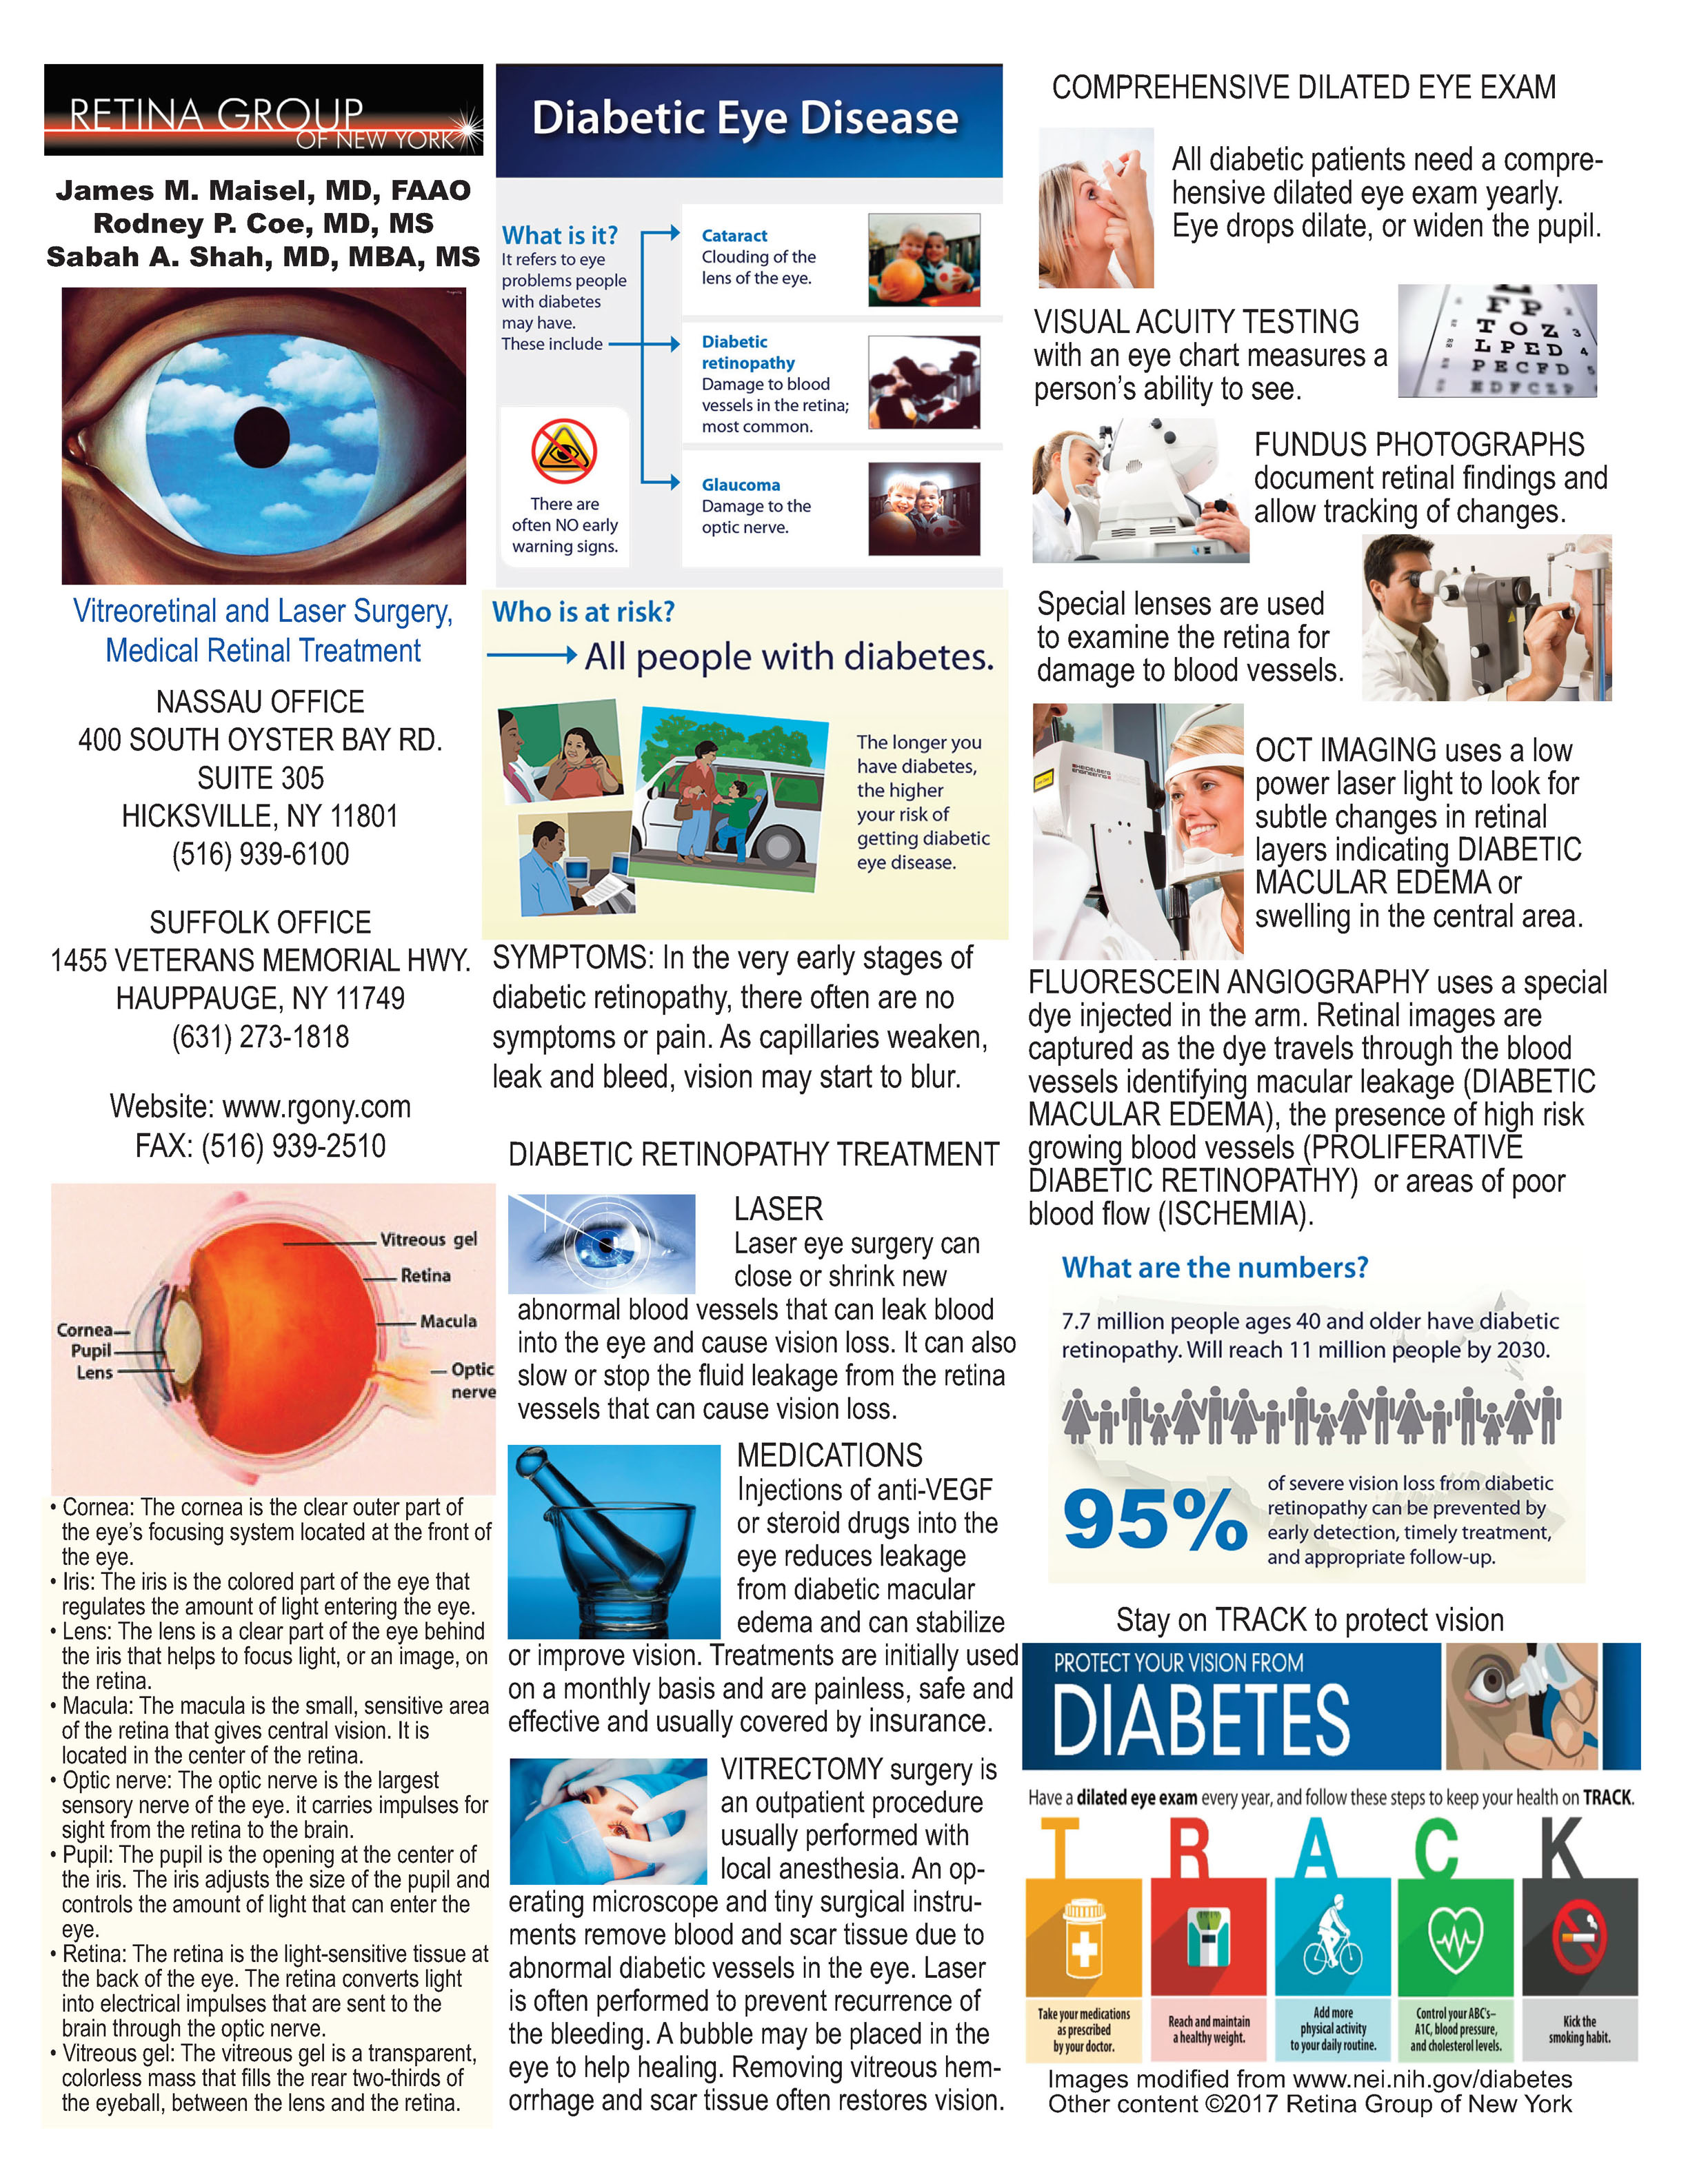 Diabetic Retinopathy information sheet - Retina Group of New York